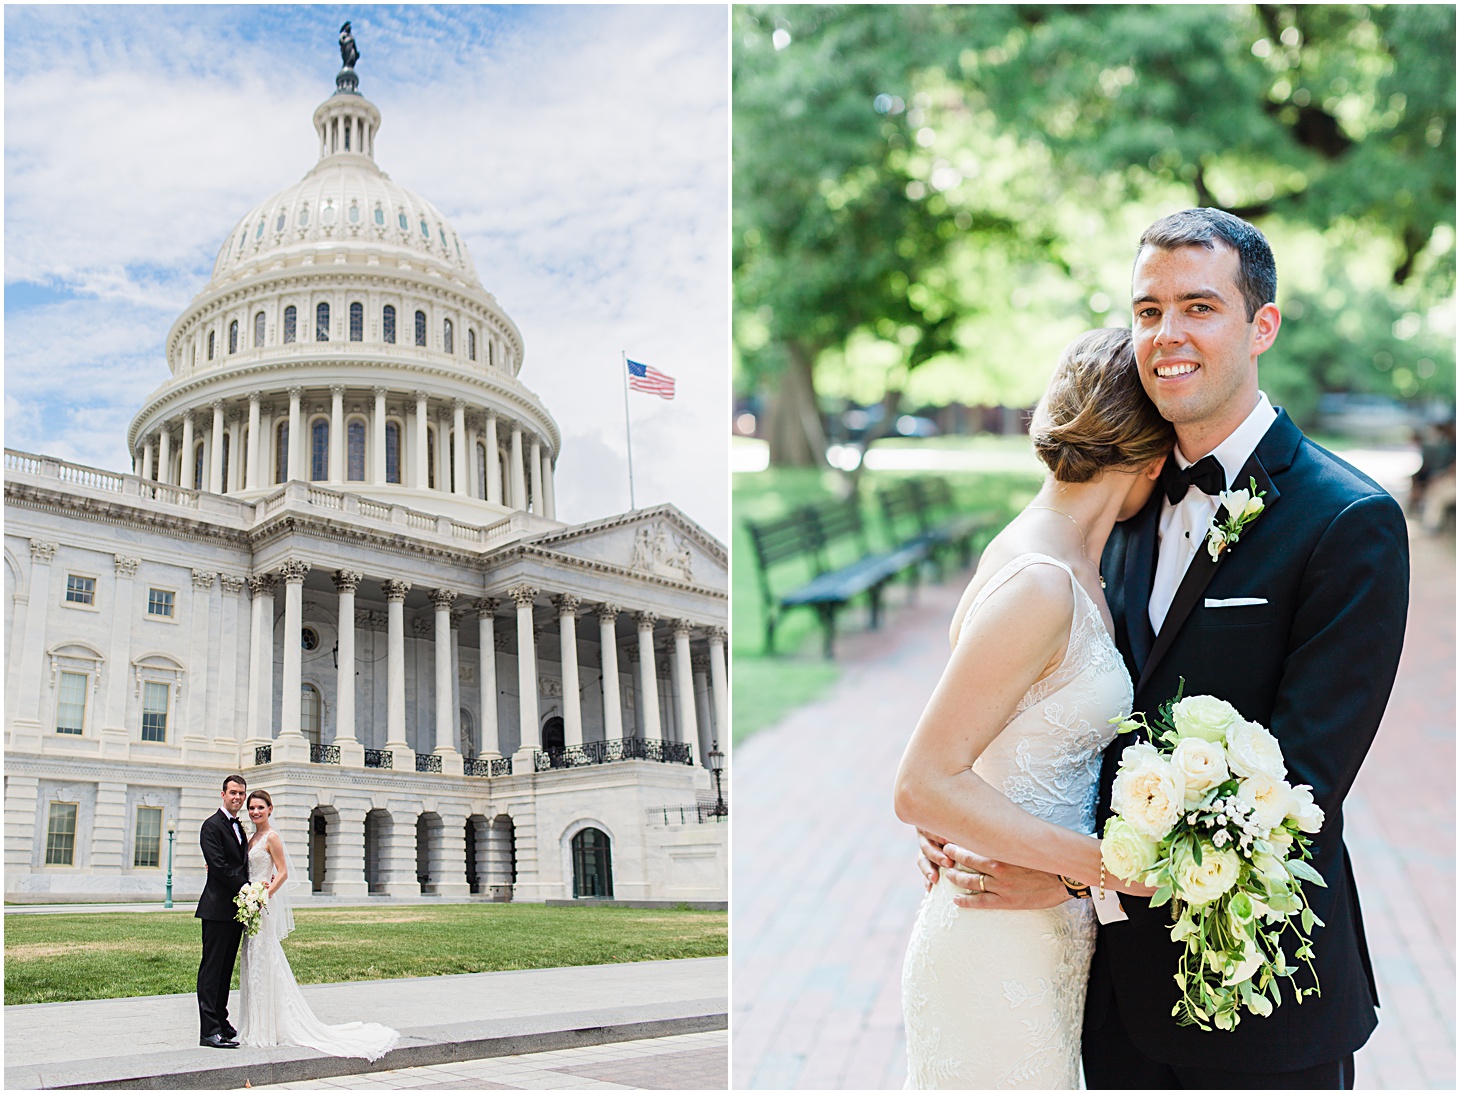 Top Washington DC wedding photographer Sarah Bradshaw